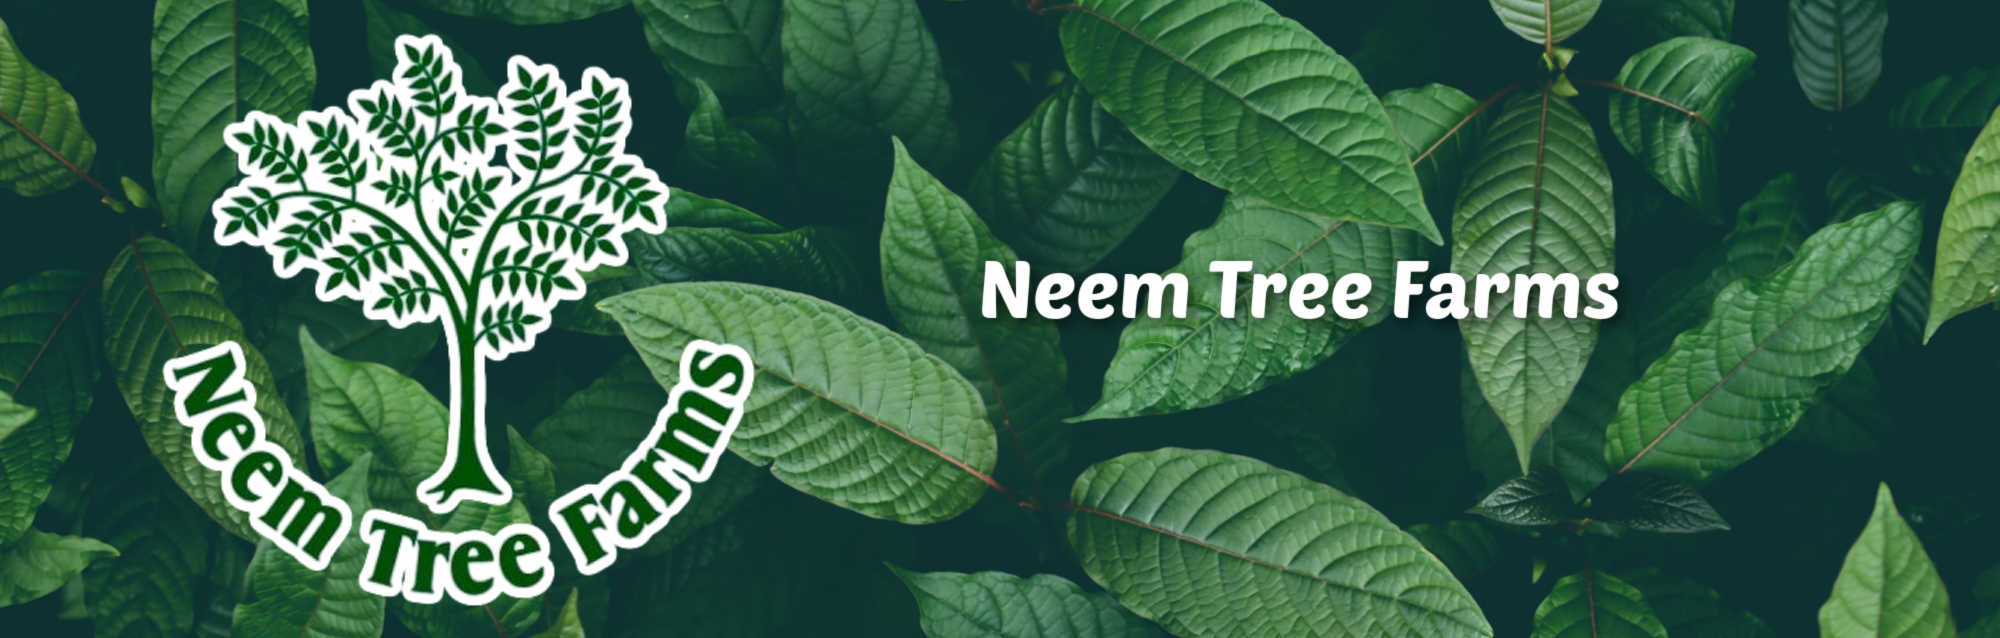 image of neem tree farms kratom plants vendor